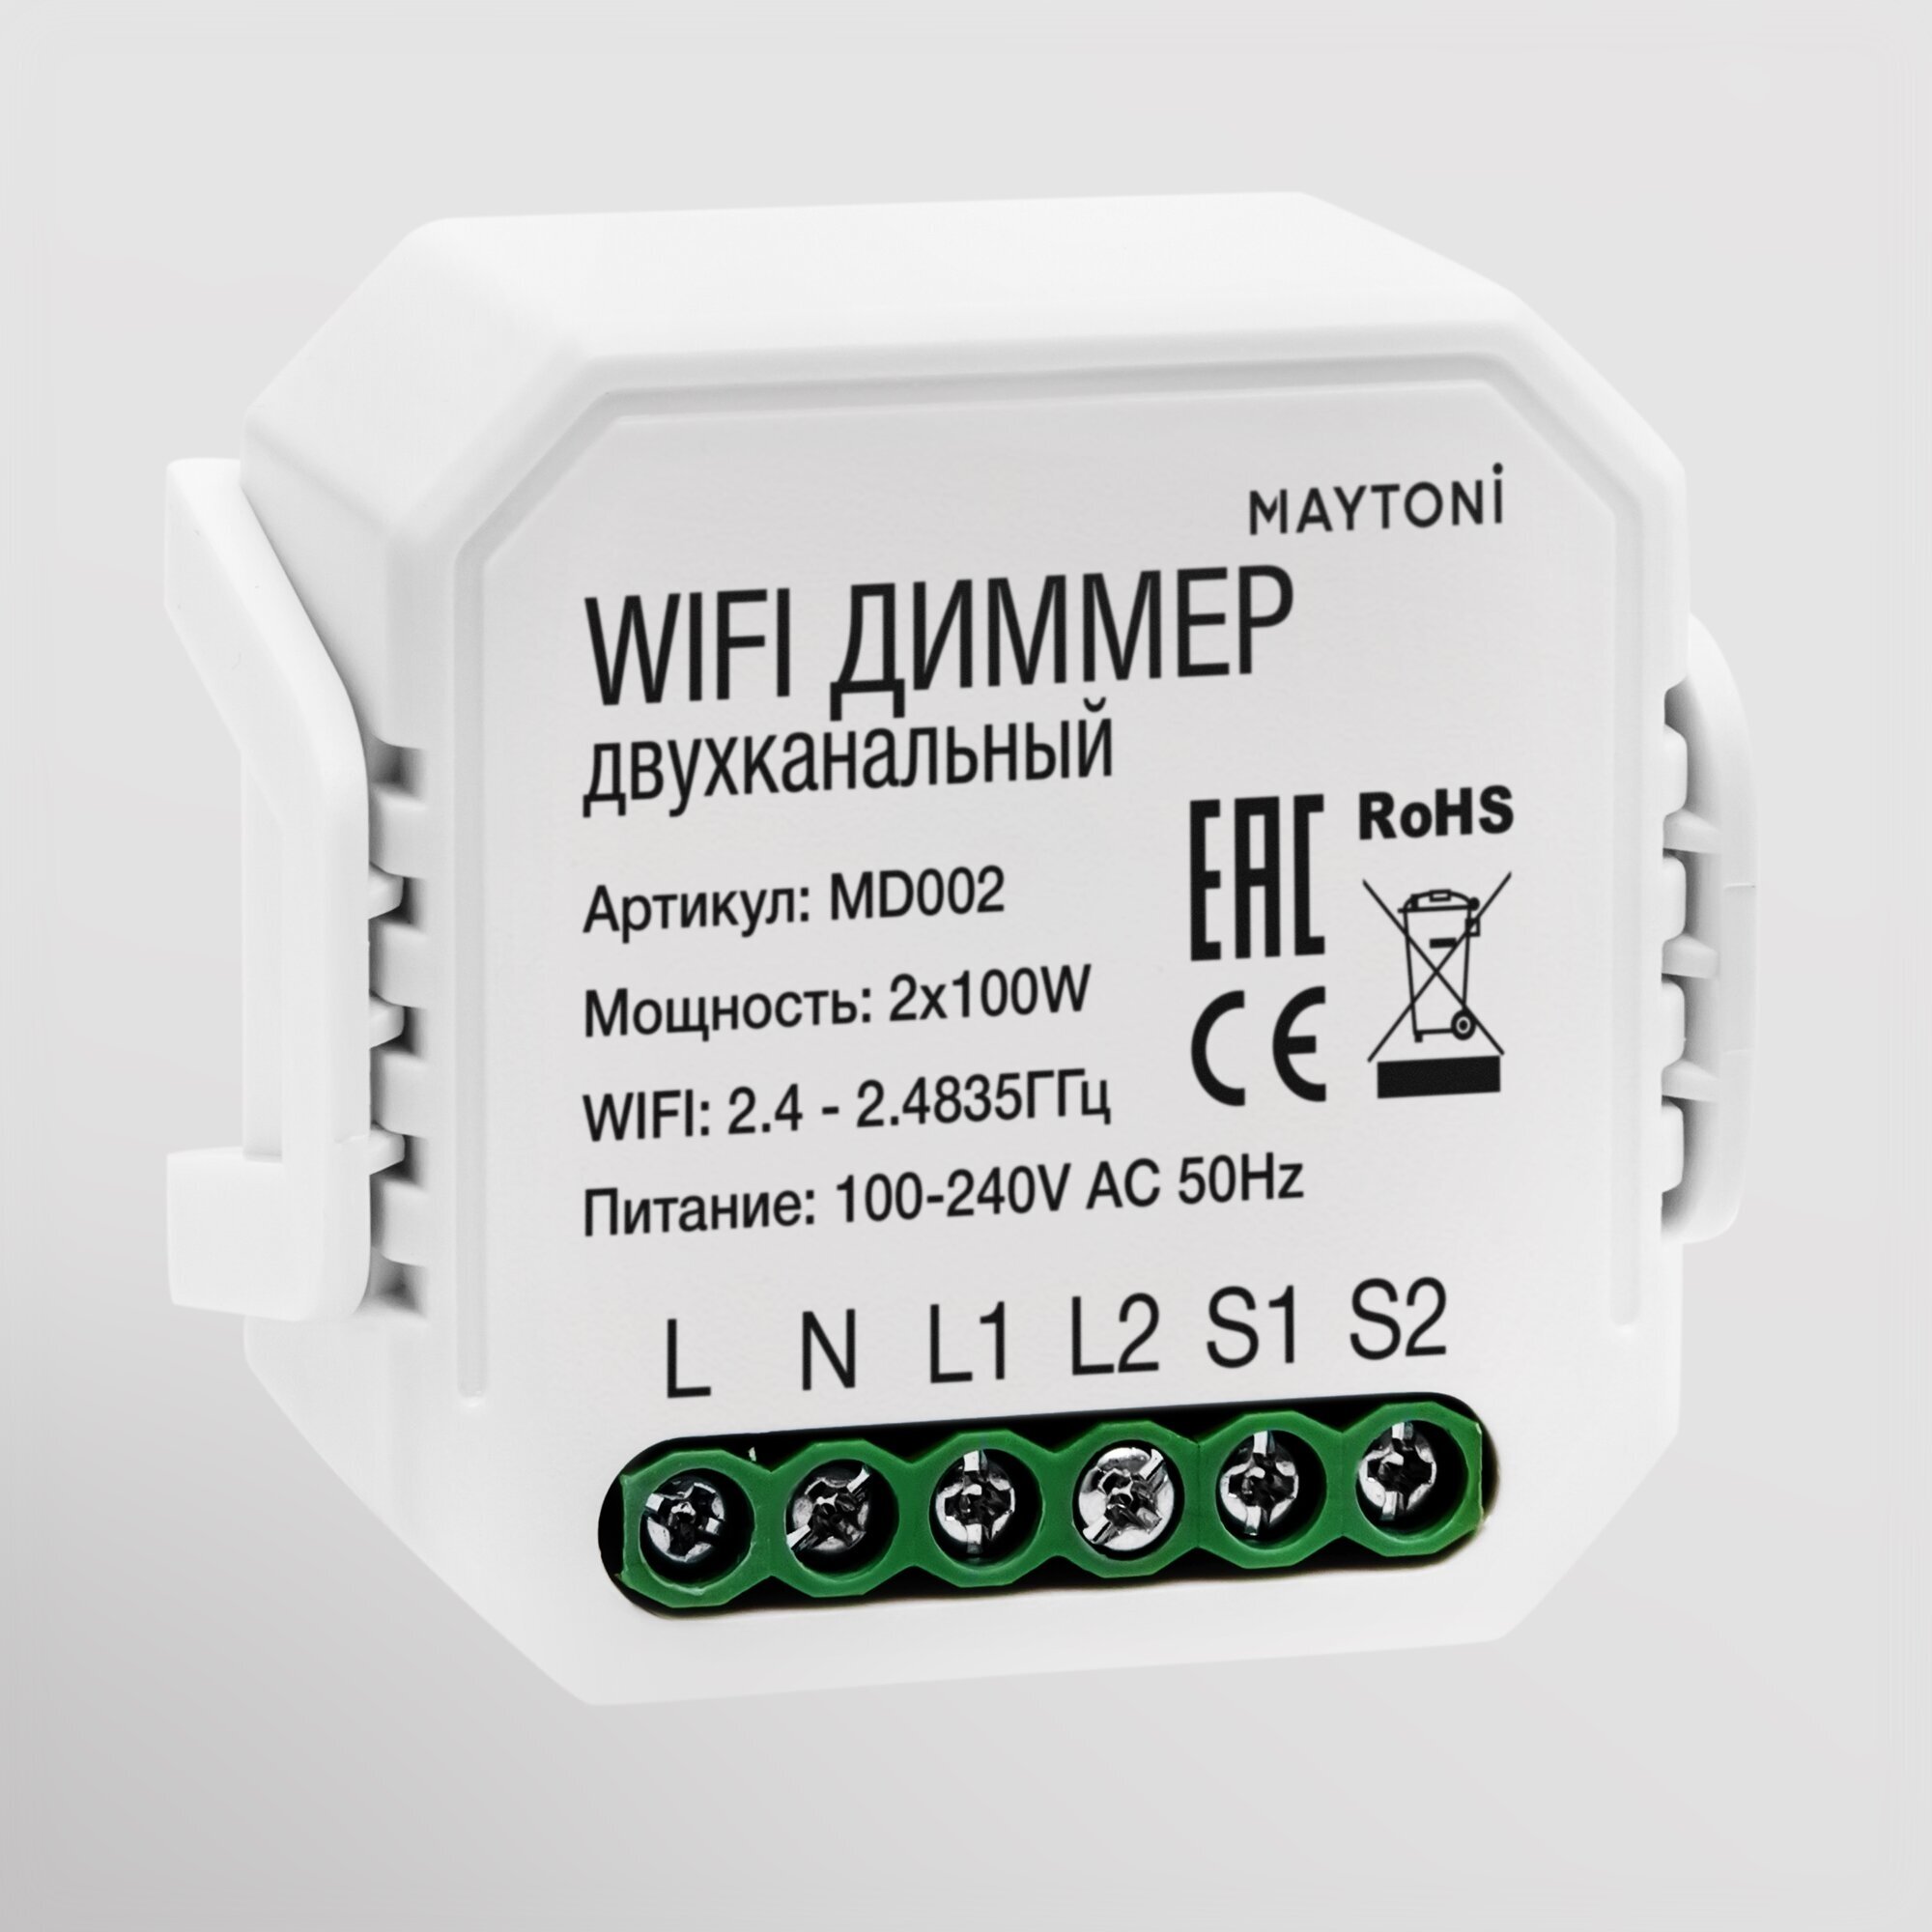 Wi-Fi диммер двухканальный Maytoni Technical Smart home - фото №8